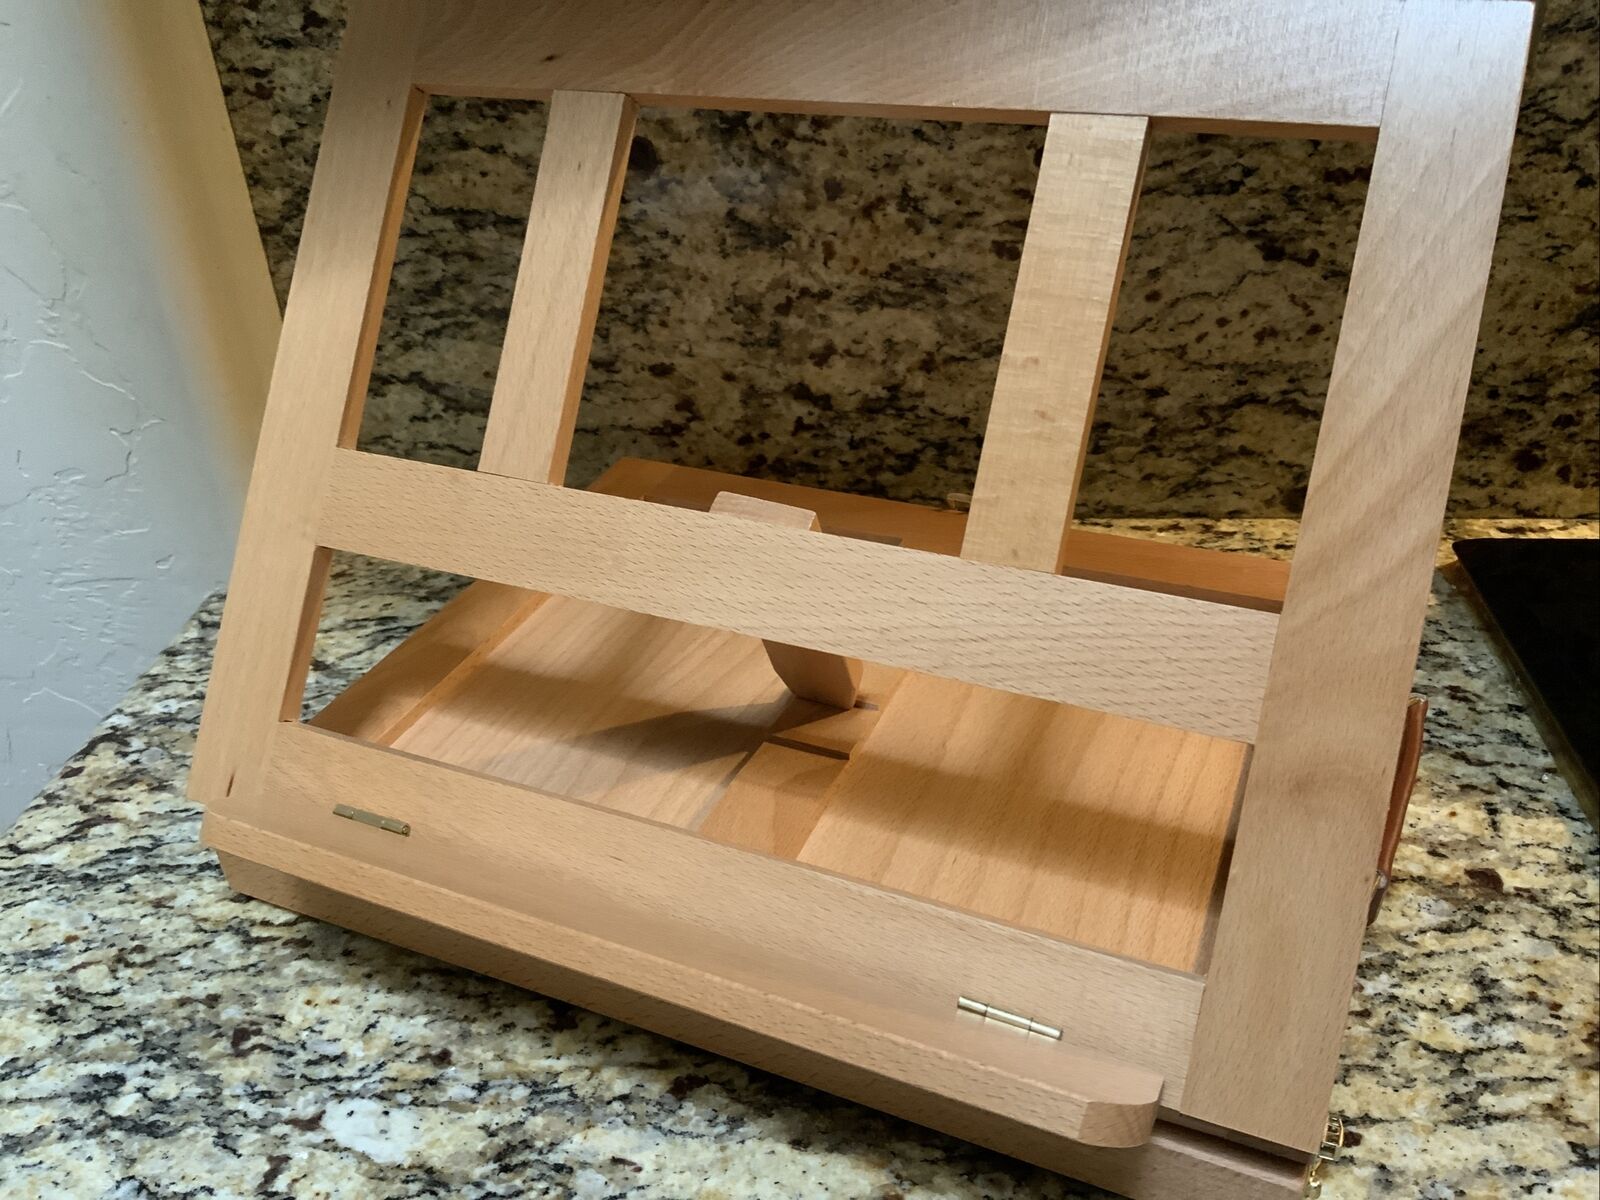 Grand Solana Adjustable Wooden 3-Drawer Storage Box Easel